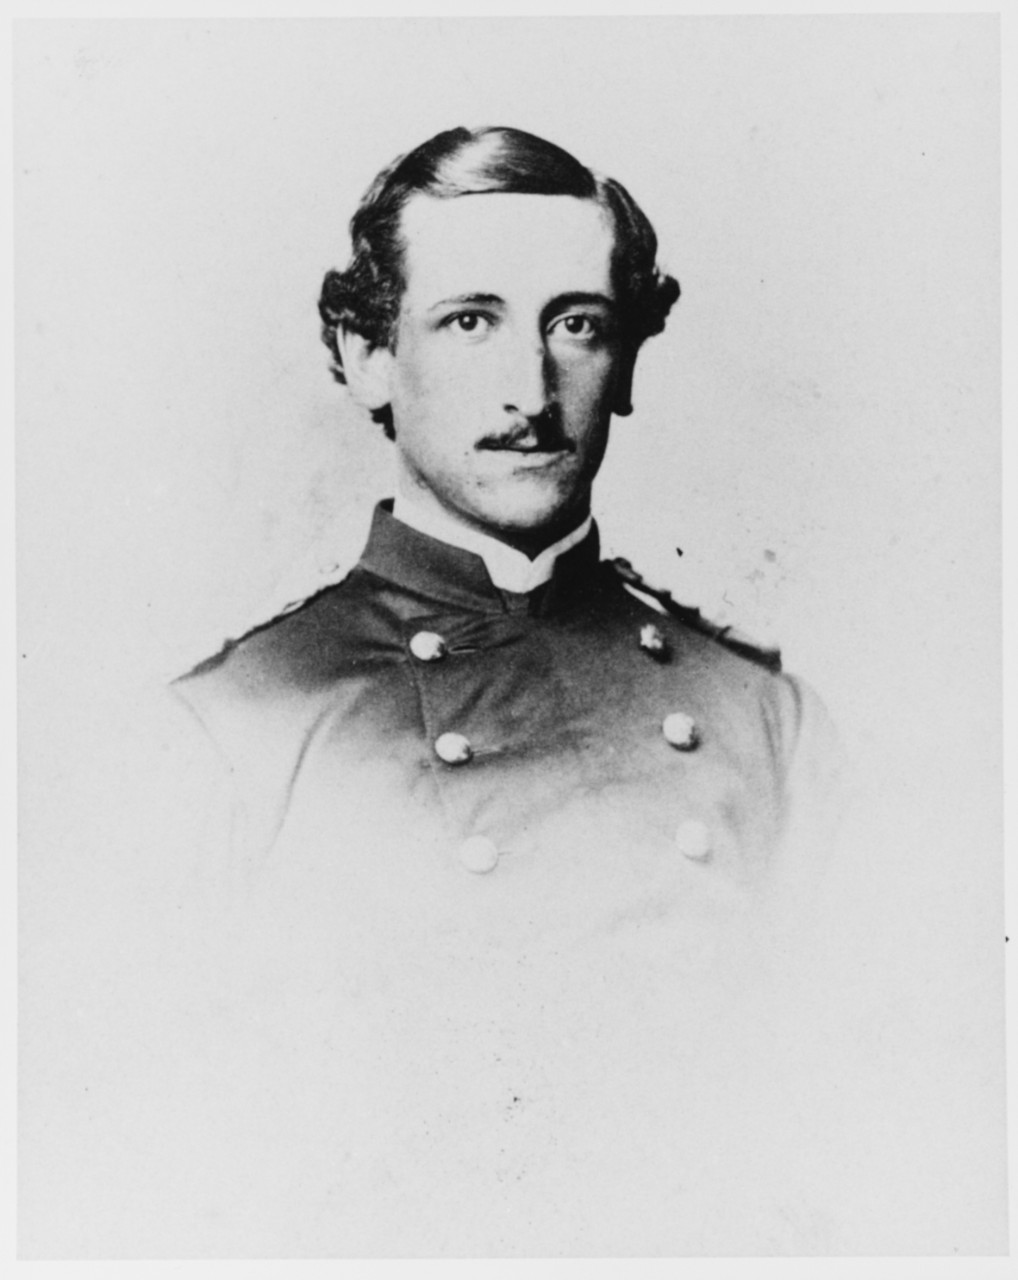 1st Lieutenant Charles H. Bradford, USMC